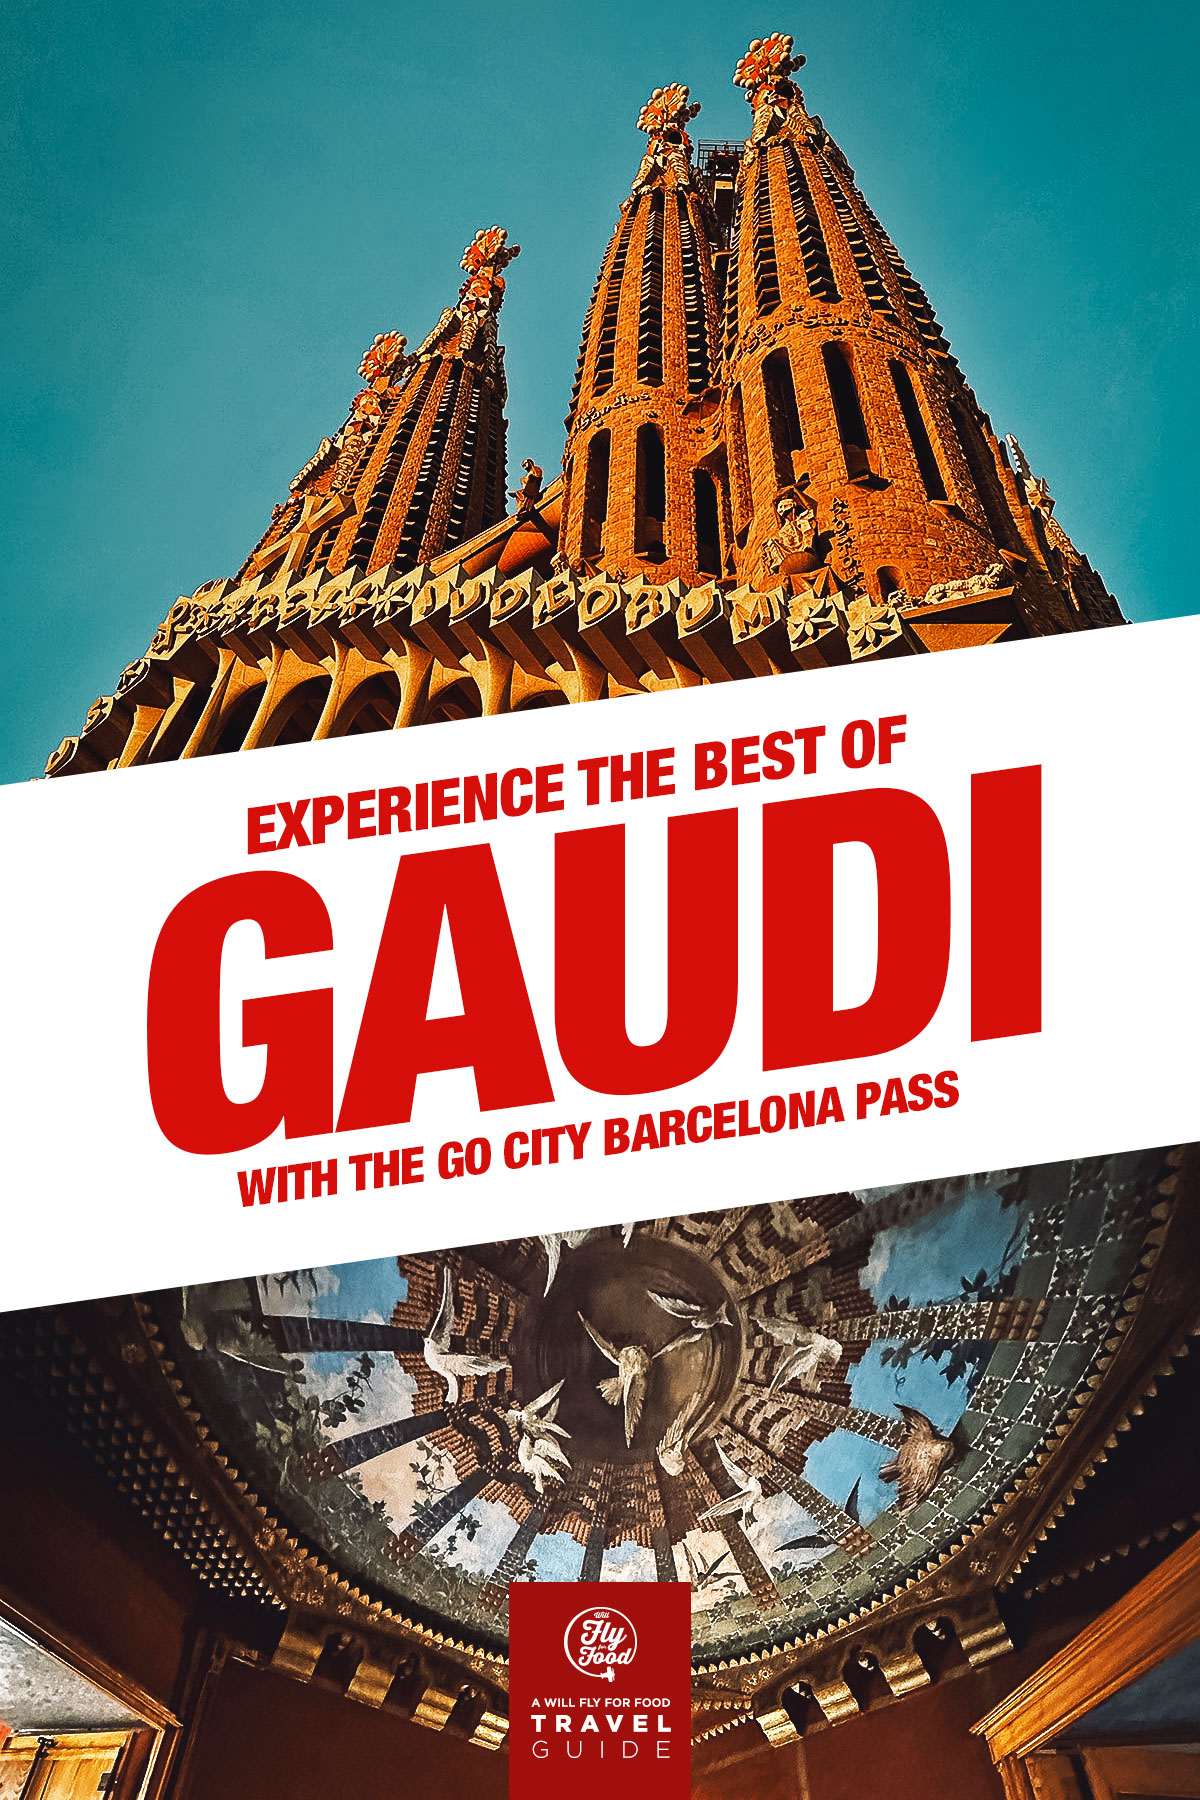 Gaudi attractions in Barcelona